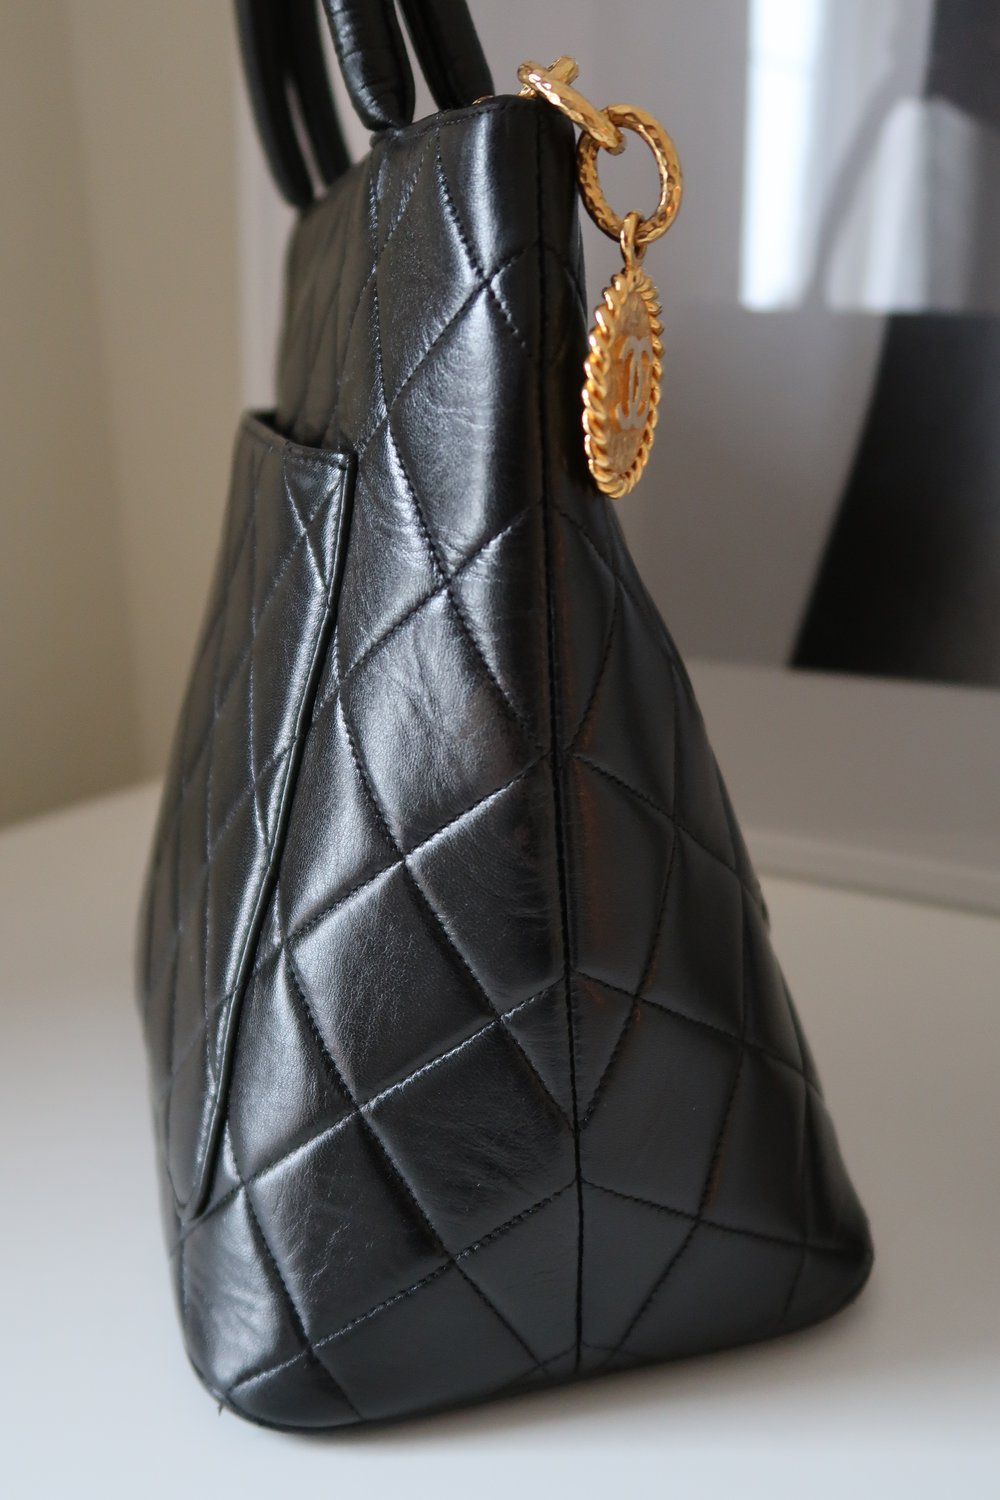 Chanel Black Medallion Tote Bag — Blaise Ruby Loves